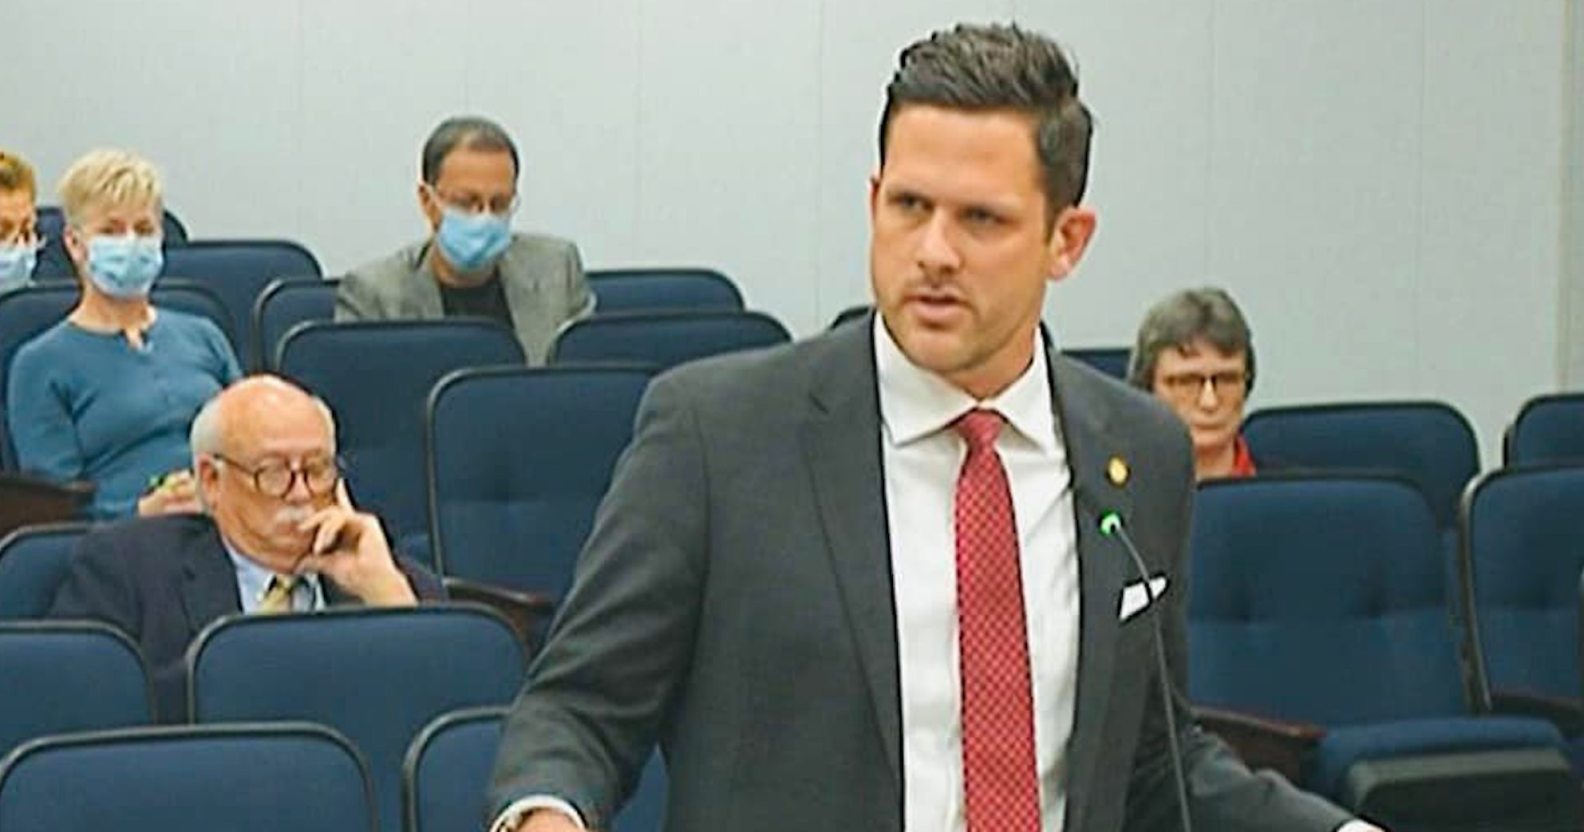 Representative Joe Harding, sponsor of Florida's 'Don't Say Gay' law